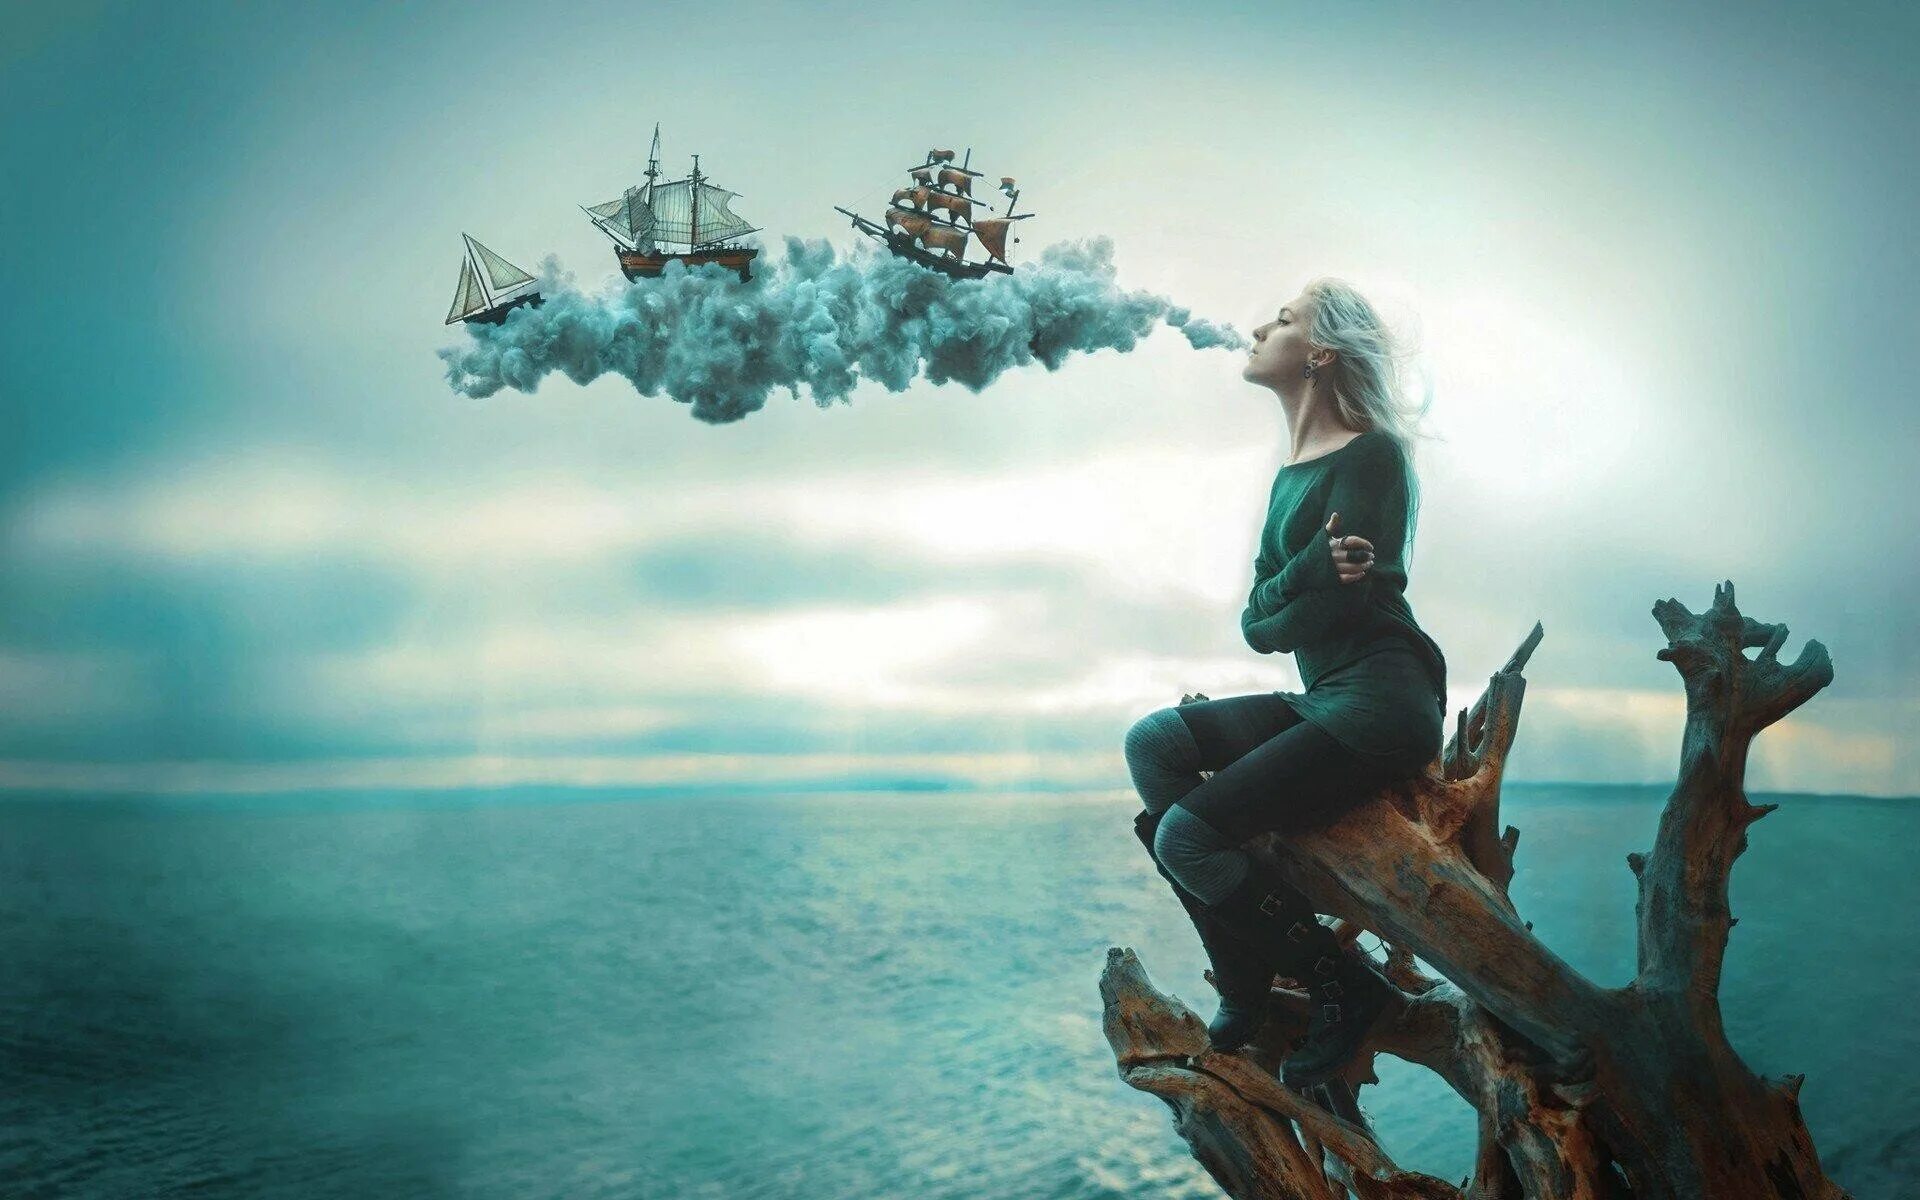 Graphic photo. Девушка на корабле. Девушка-море. Фотосессия в стиле фантастика. Фантастическое море.